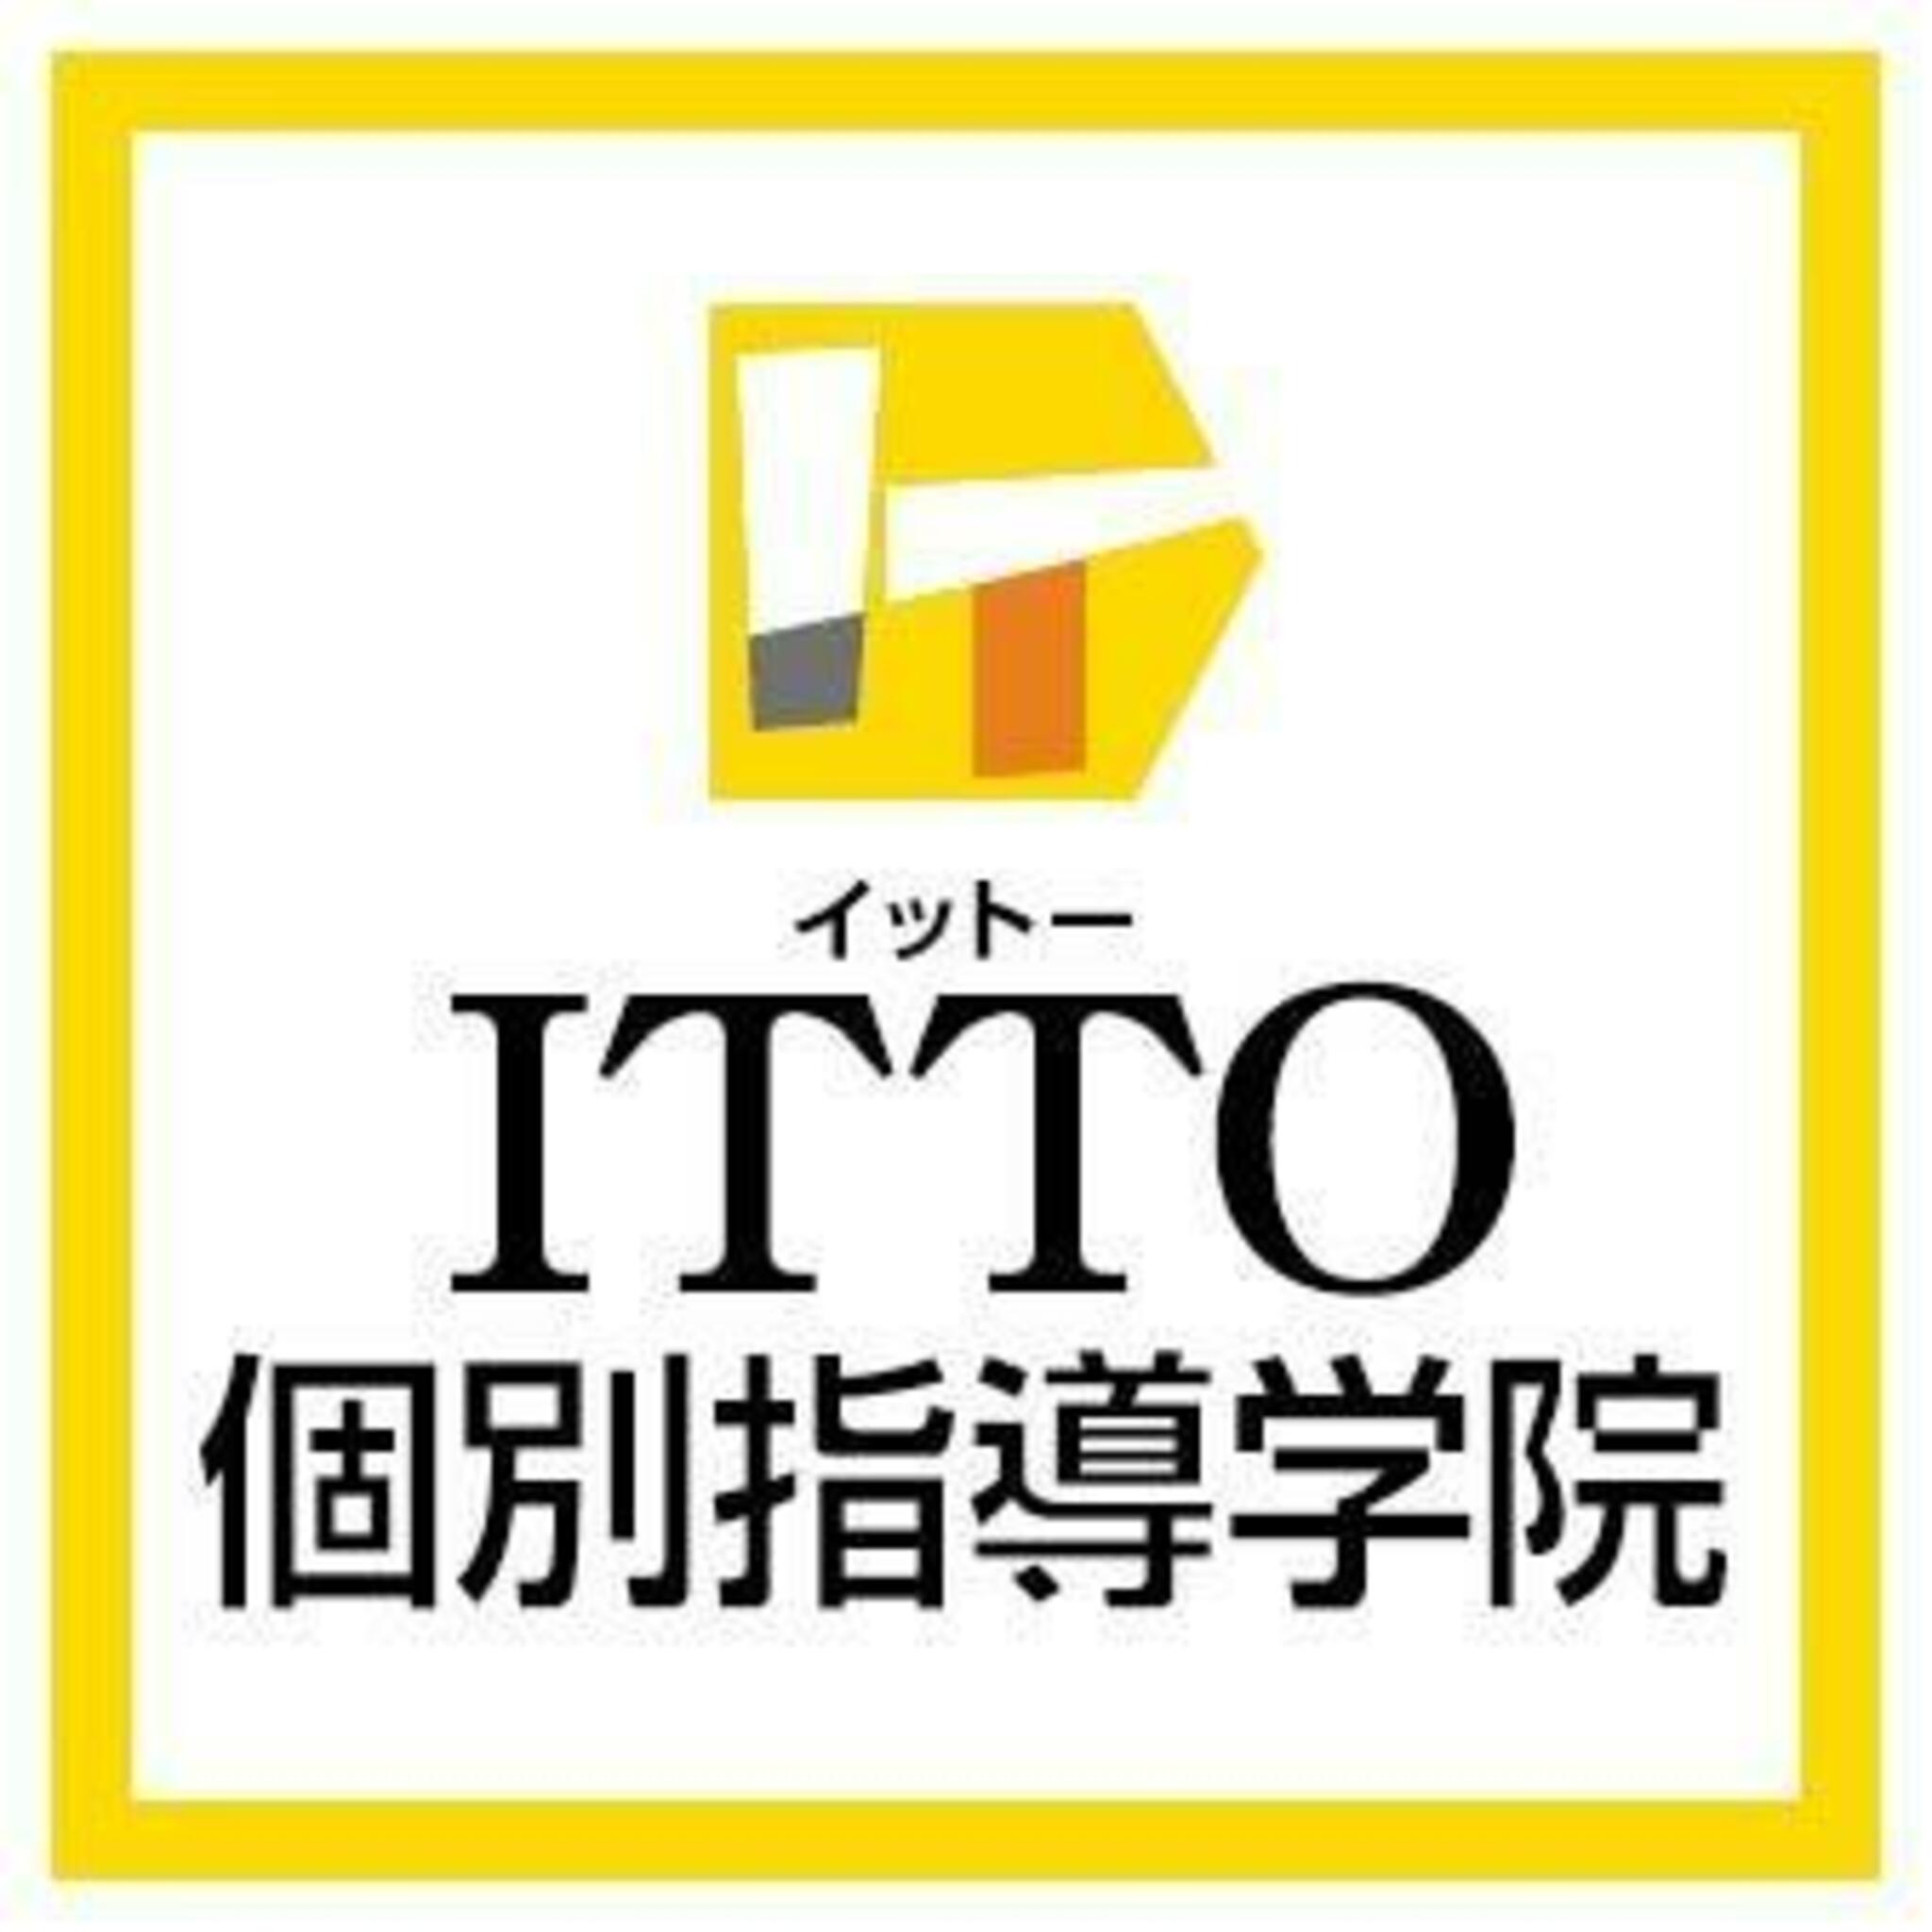 ITTO個別指導学院 熊本帯山校の代表写真6